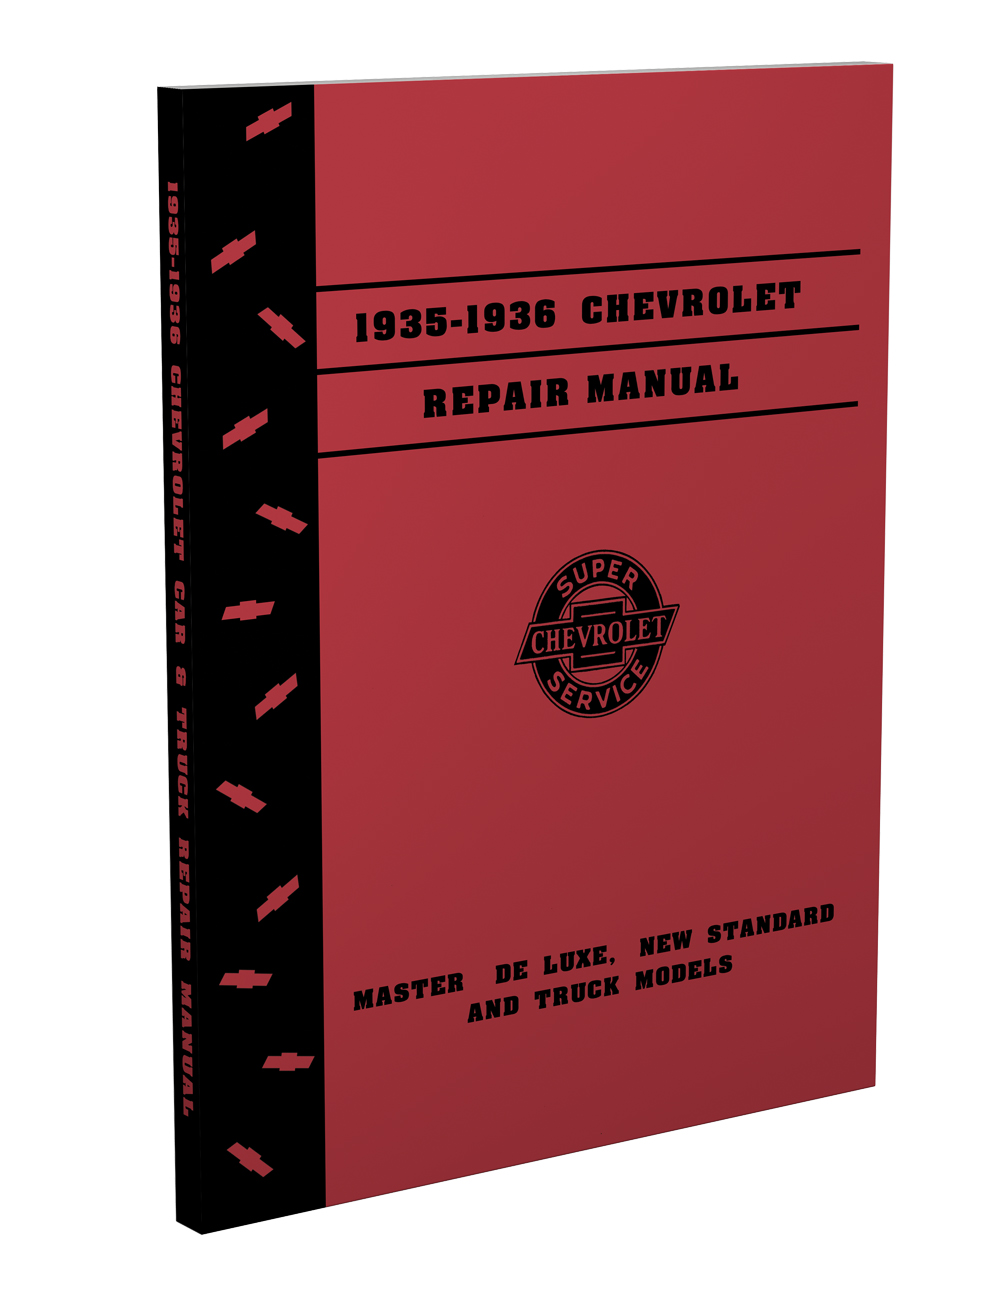 chevrolet truck shop manual 1951 pdf